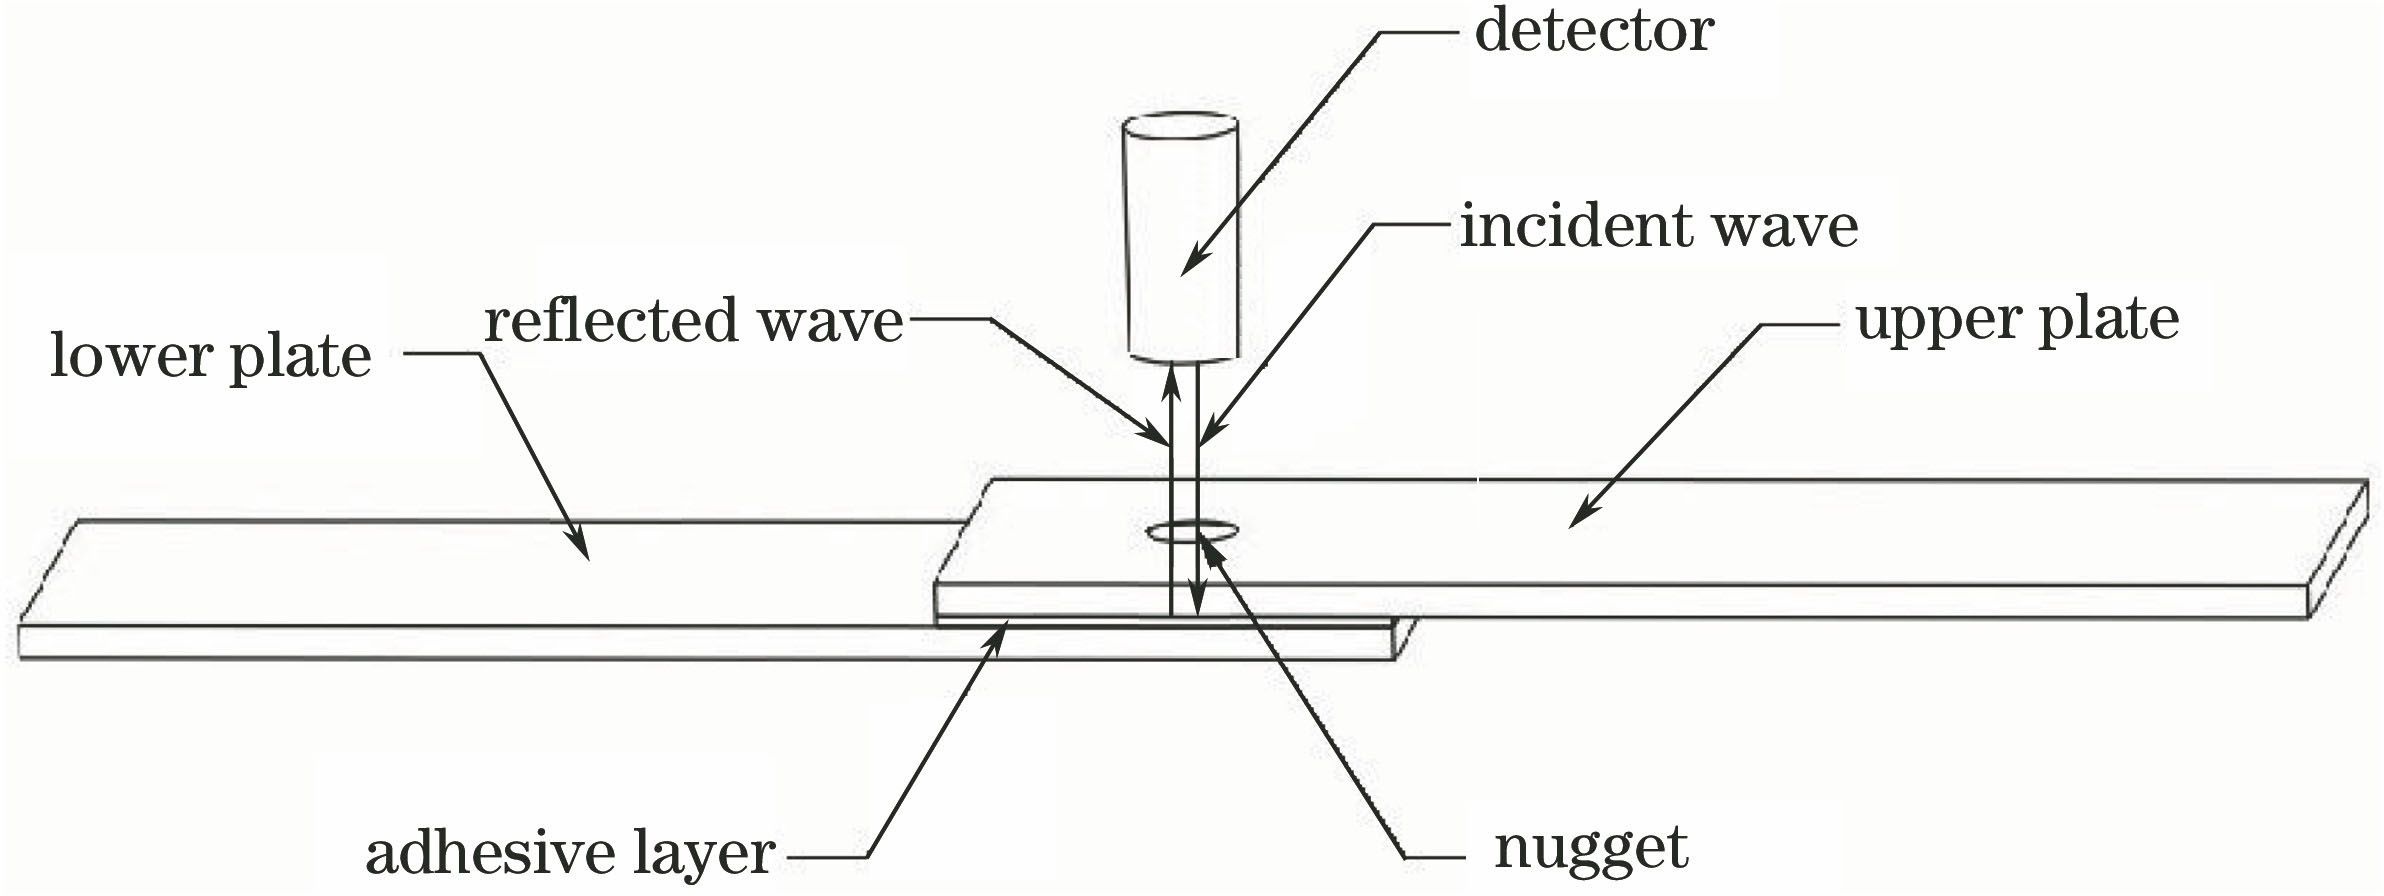 Schematic of ultrasonic C-scan imaging detection